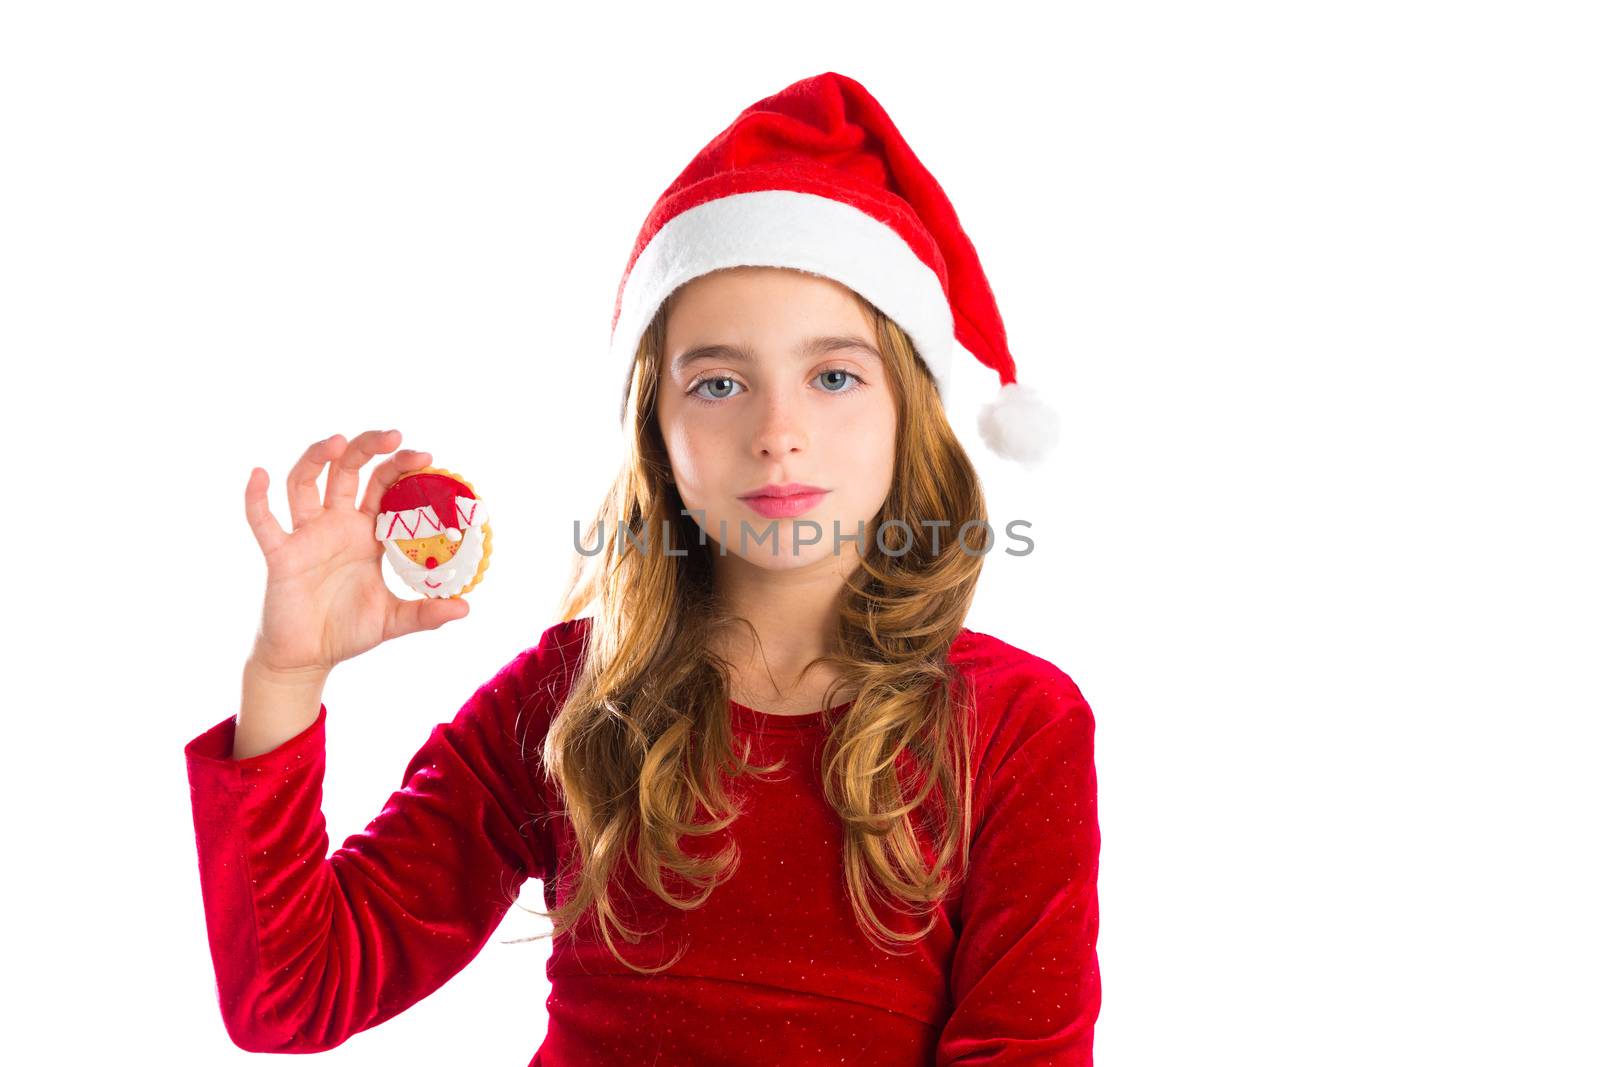 Christmas Santa cookie and Xmas dress kid girl by lunamarina